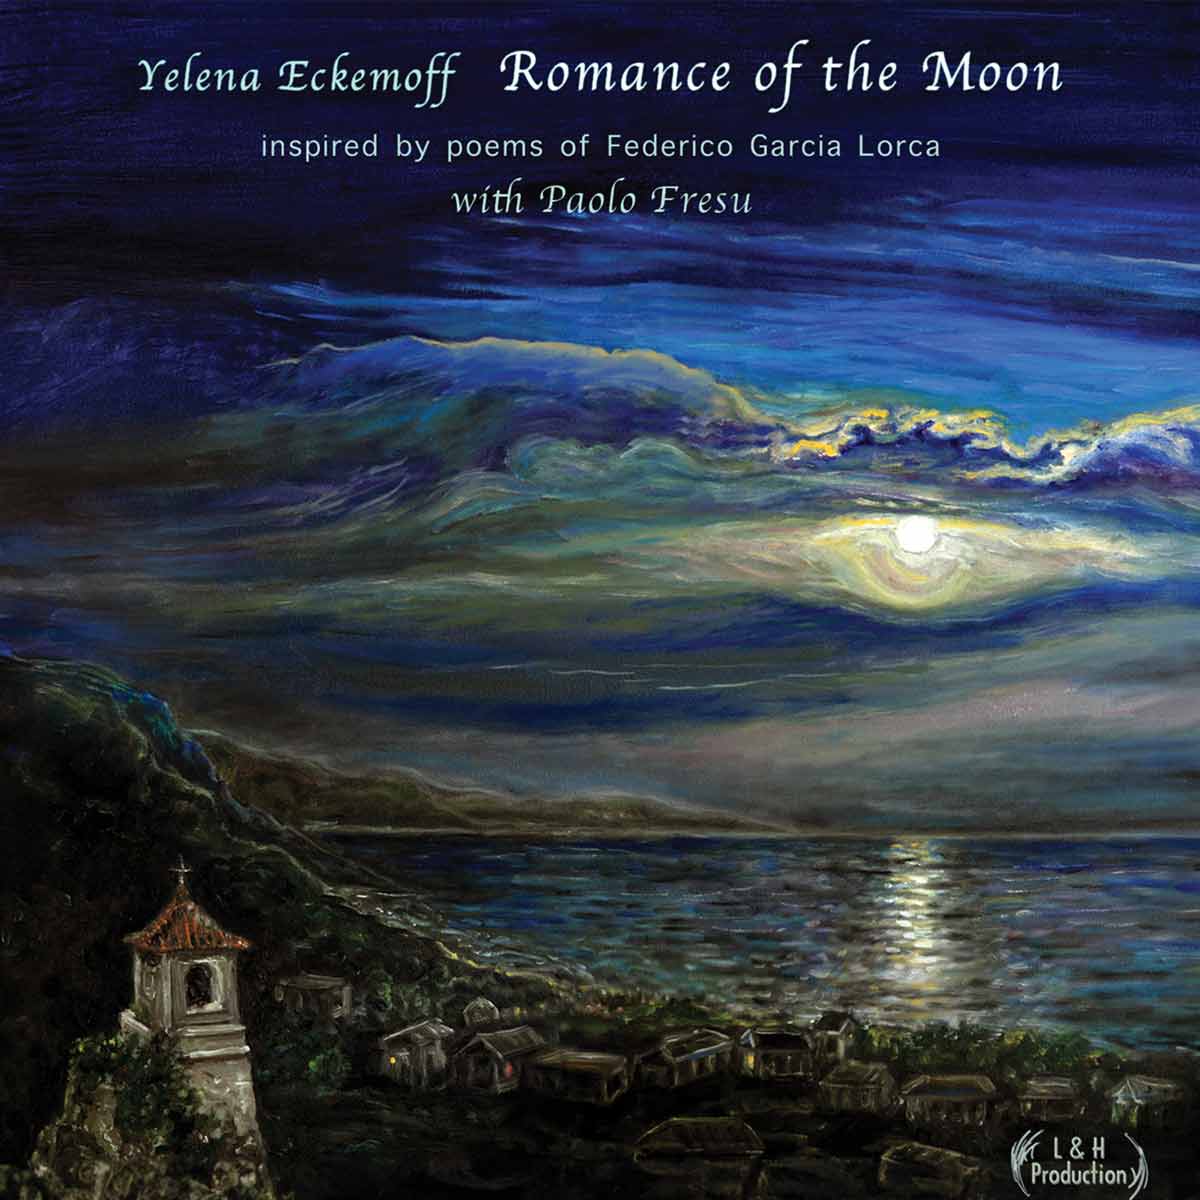 Romance of the Moon